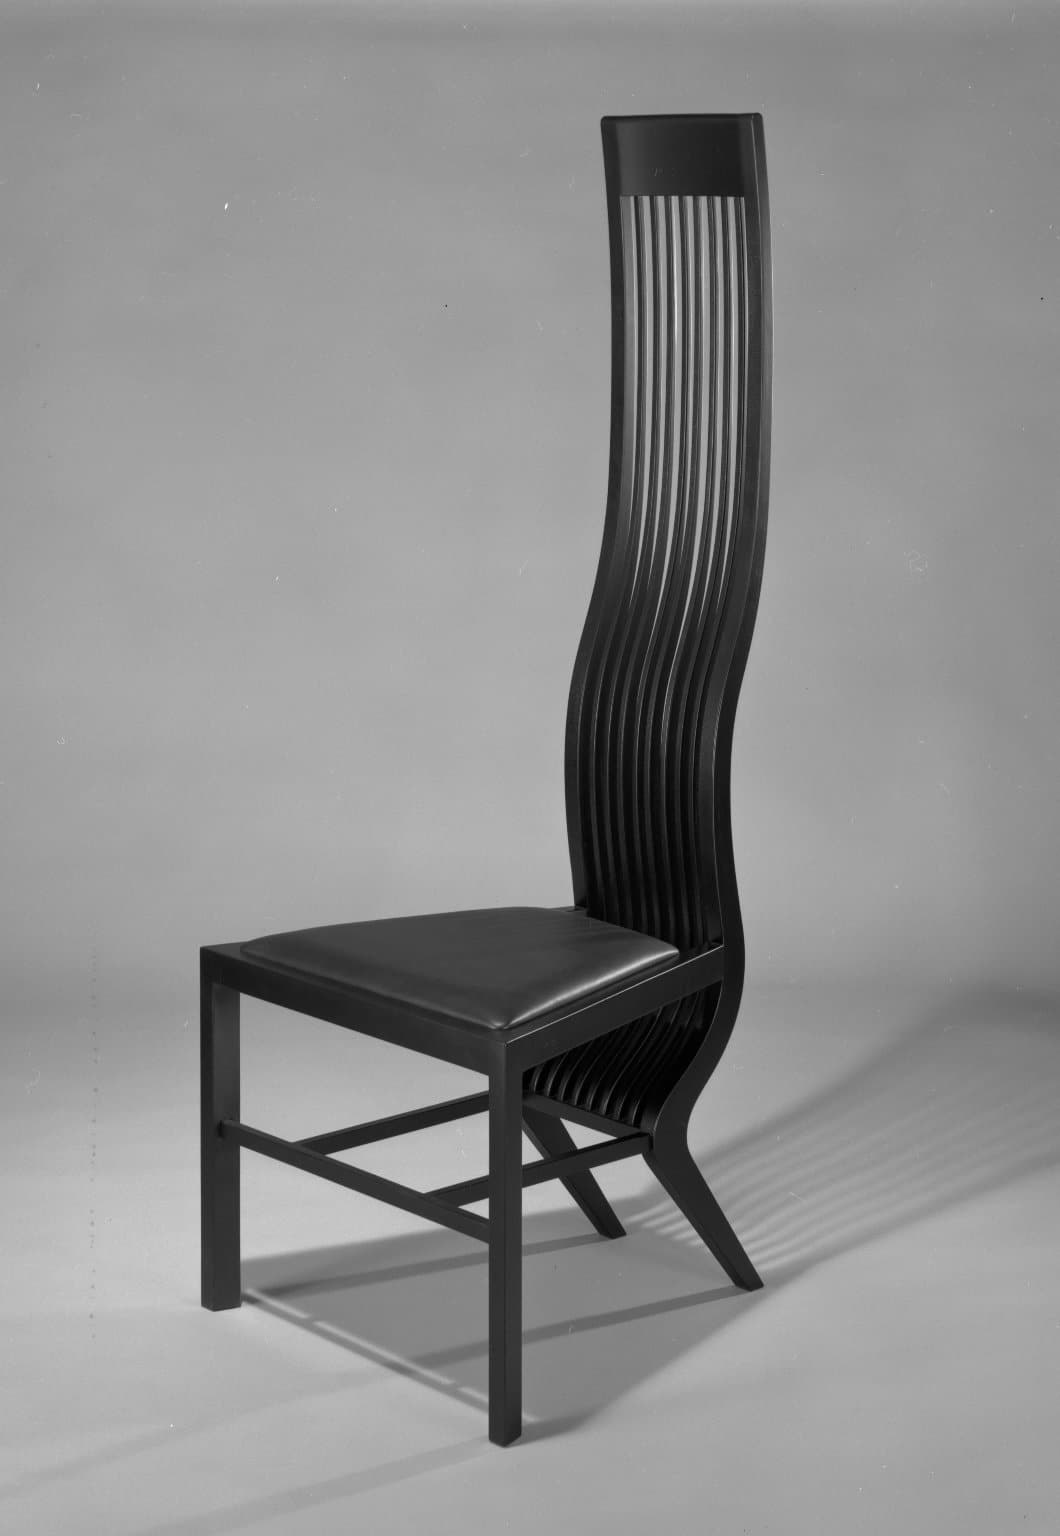 Arata isozaki, chaise « marilyn », bouleau teinté, tendo mokko (japon), 1973